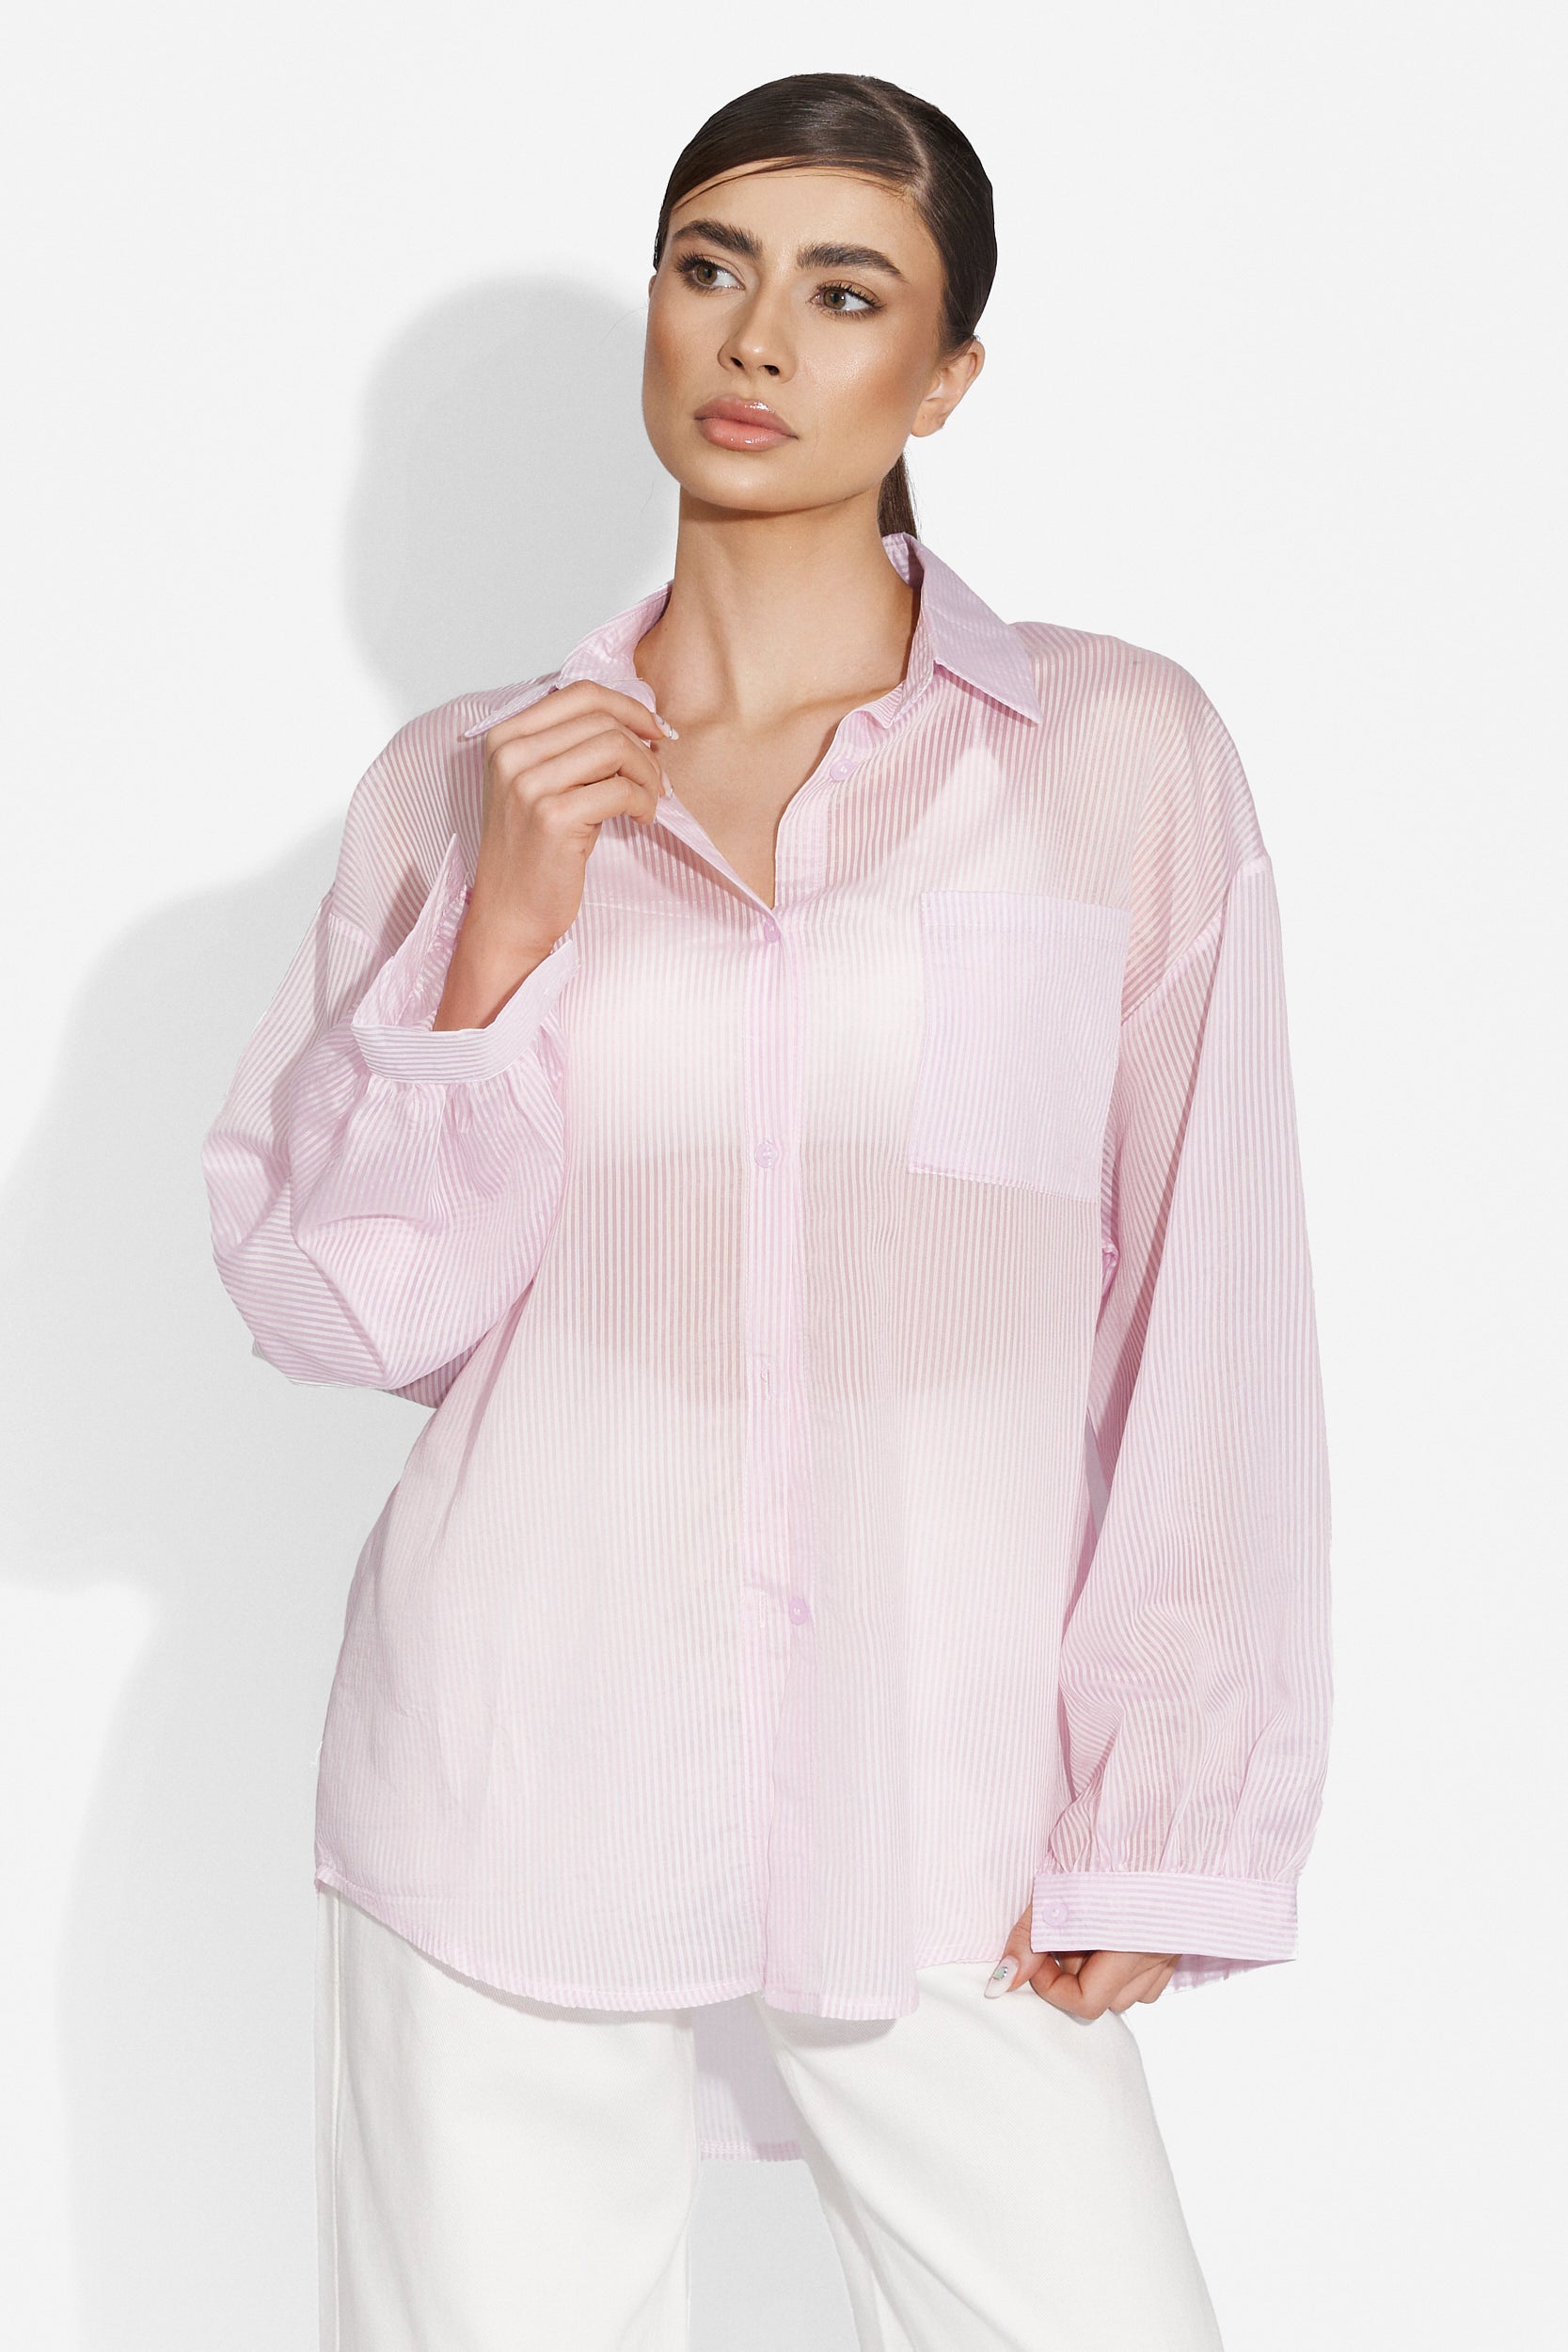 Ladies elegant pink shirt Valety Bogas